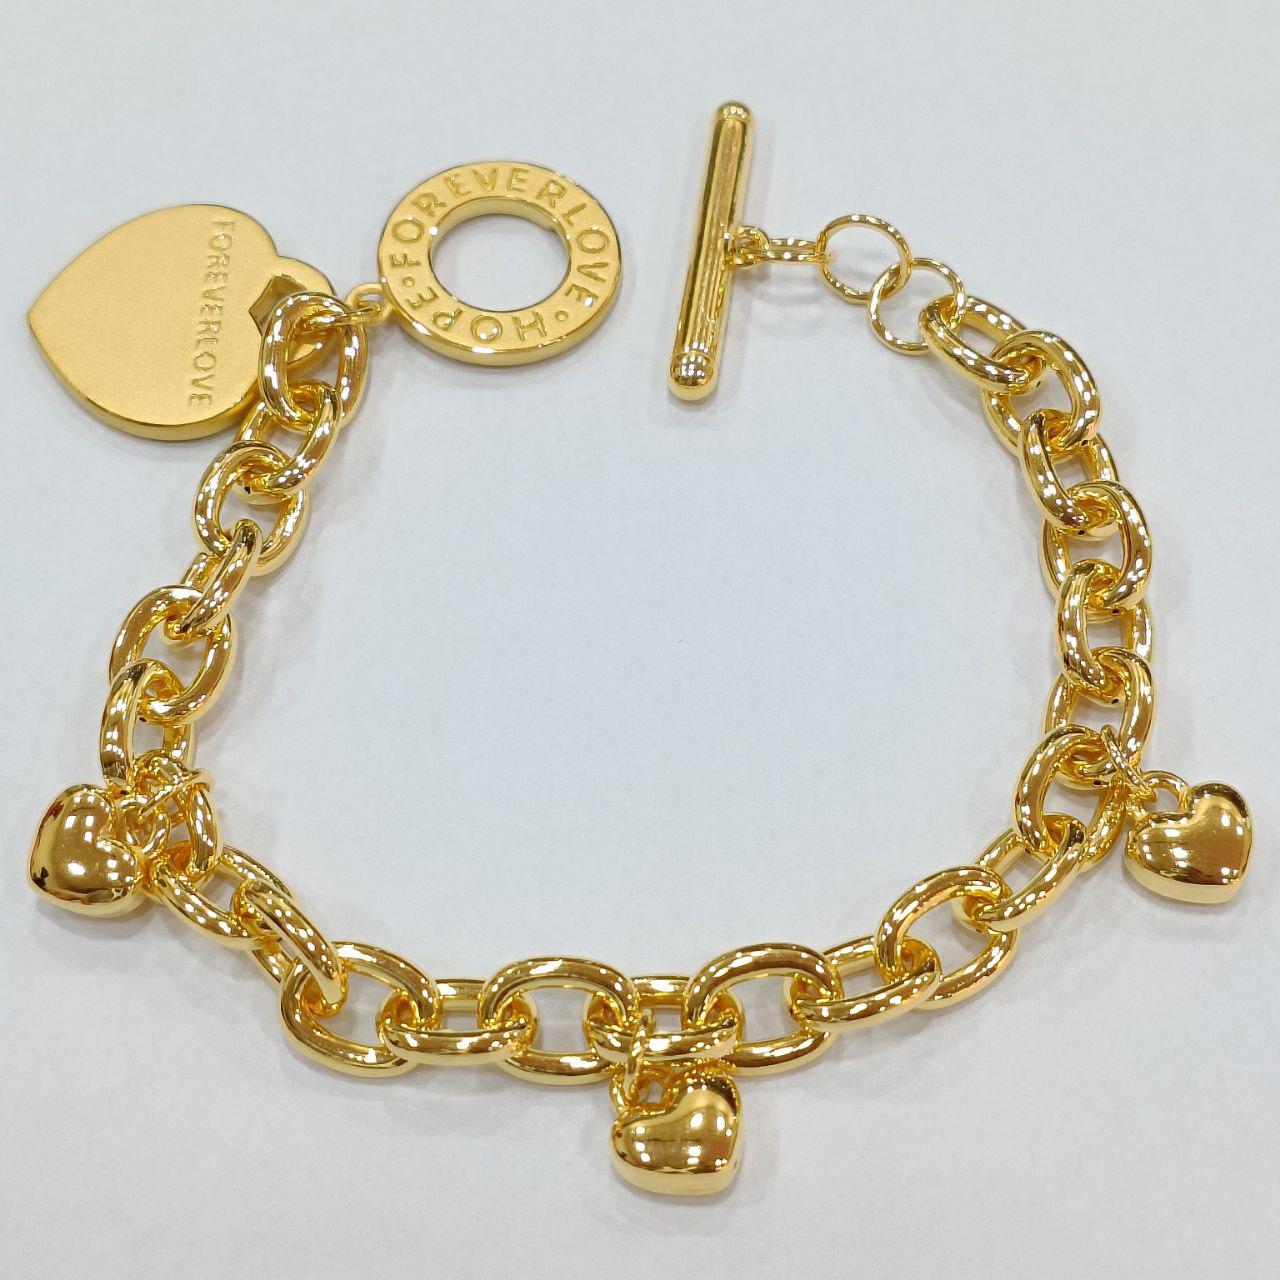 24k / 999 Gold Chain with heart pendant bracelet-Bracelets-Best Gold Shop